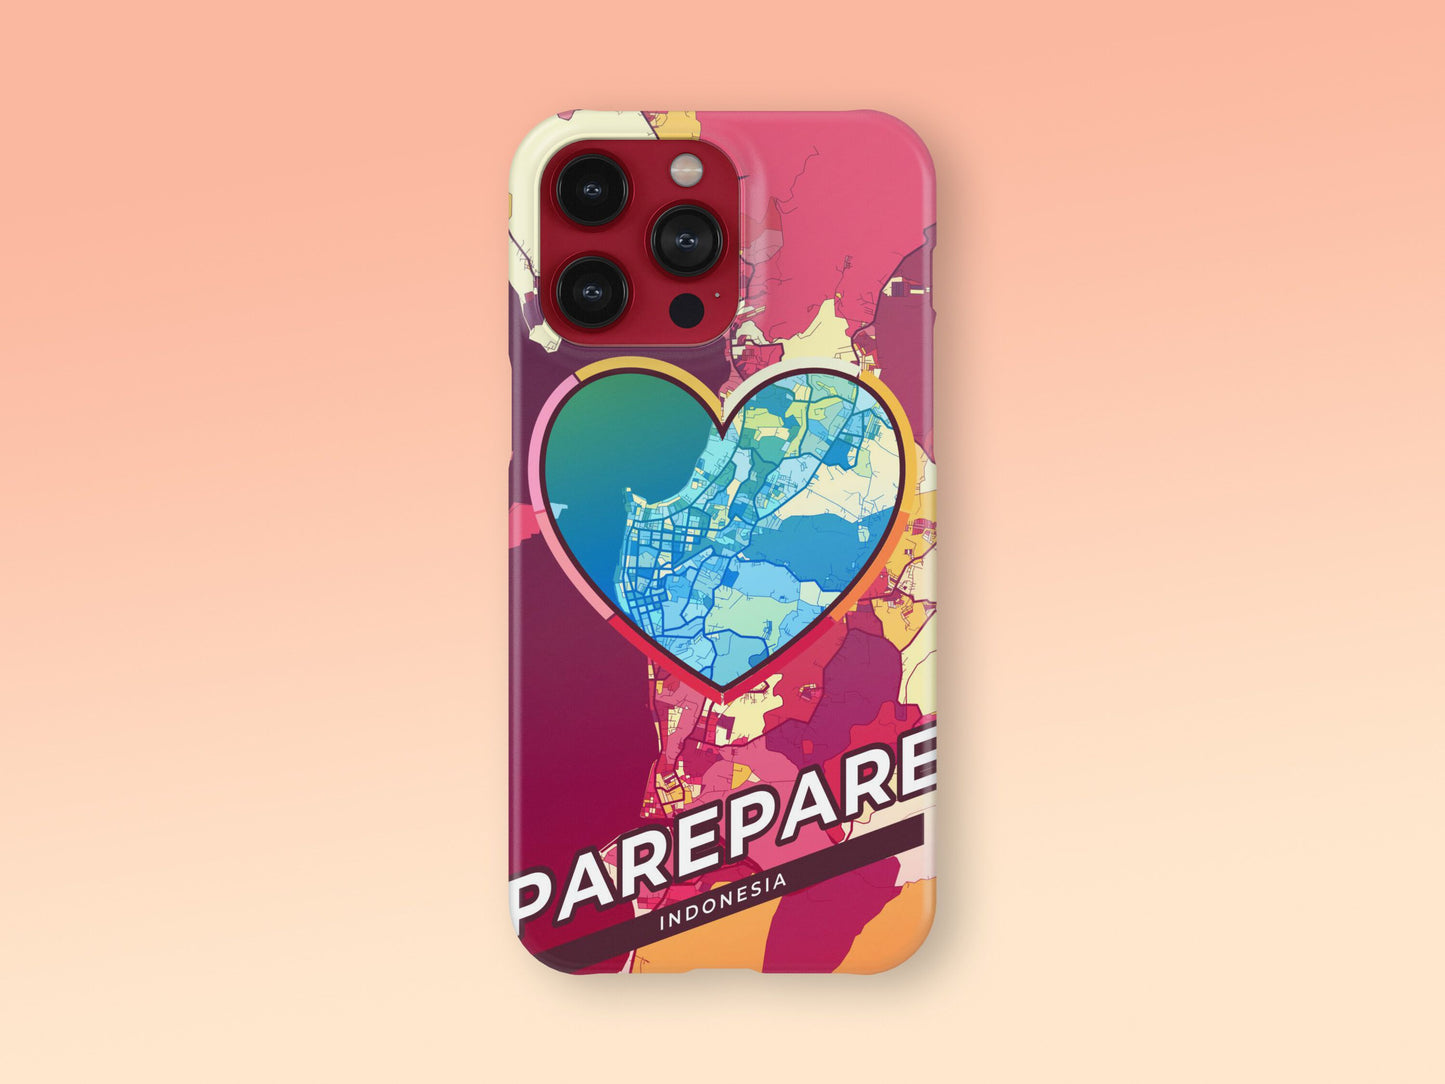 Parepare Indonesia slim phone case with colorful icon 2